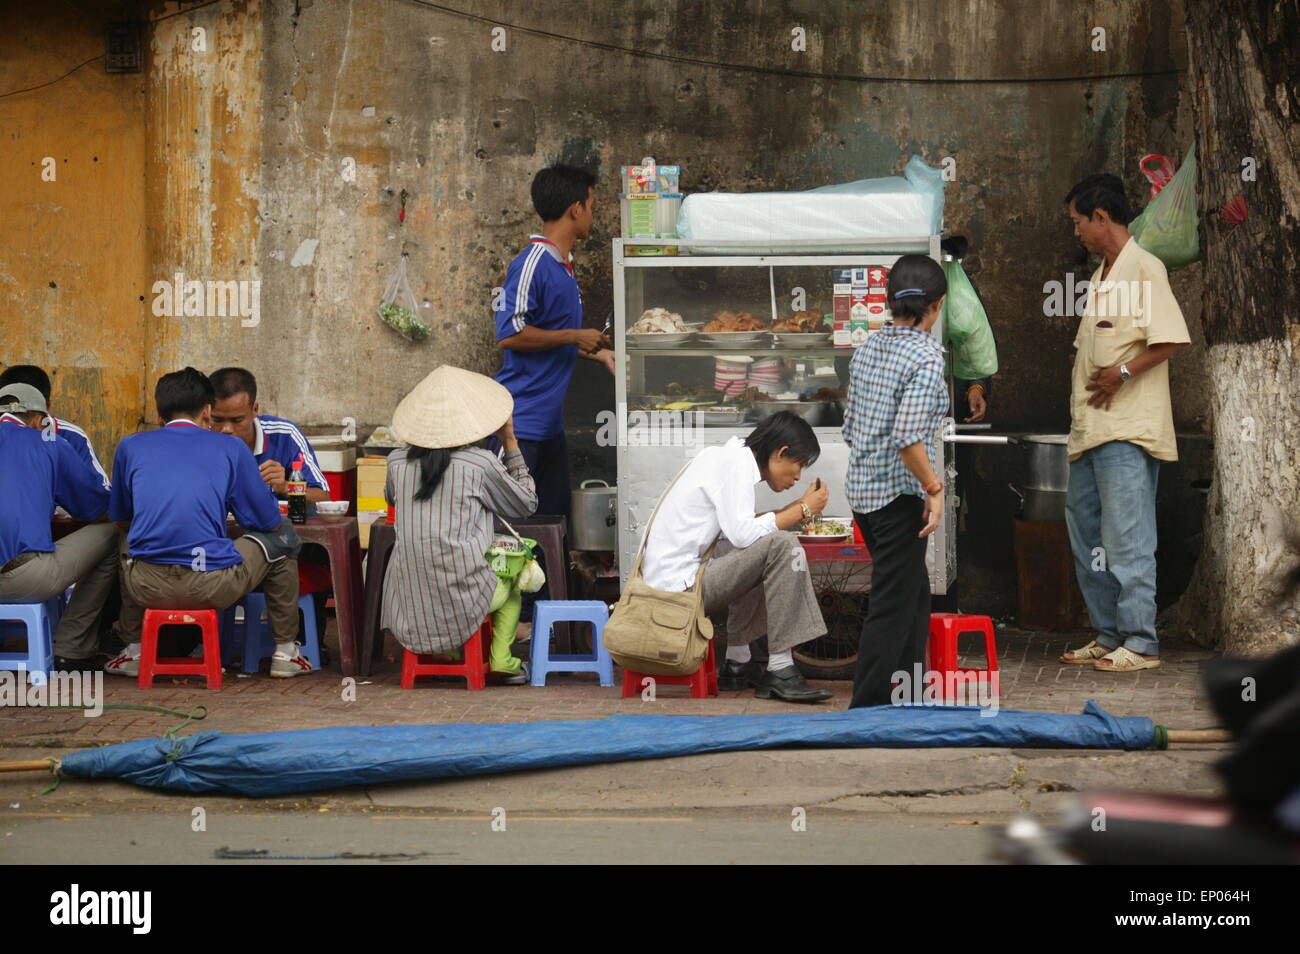 Everyday scene in the city of Hanoi in Vietnam Stock Photo